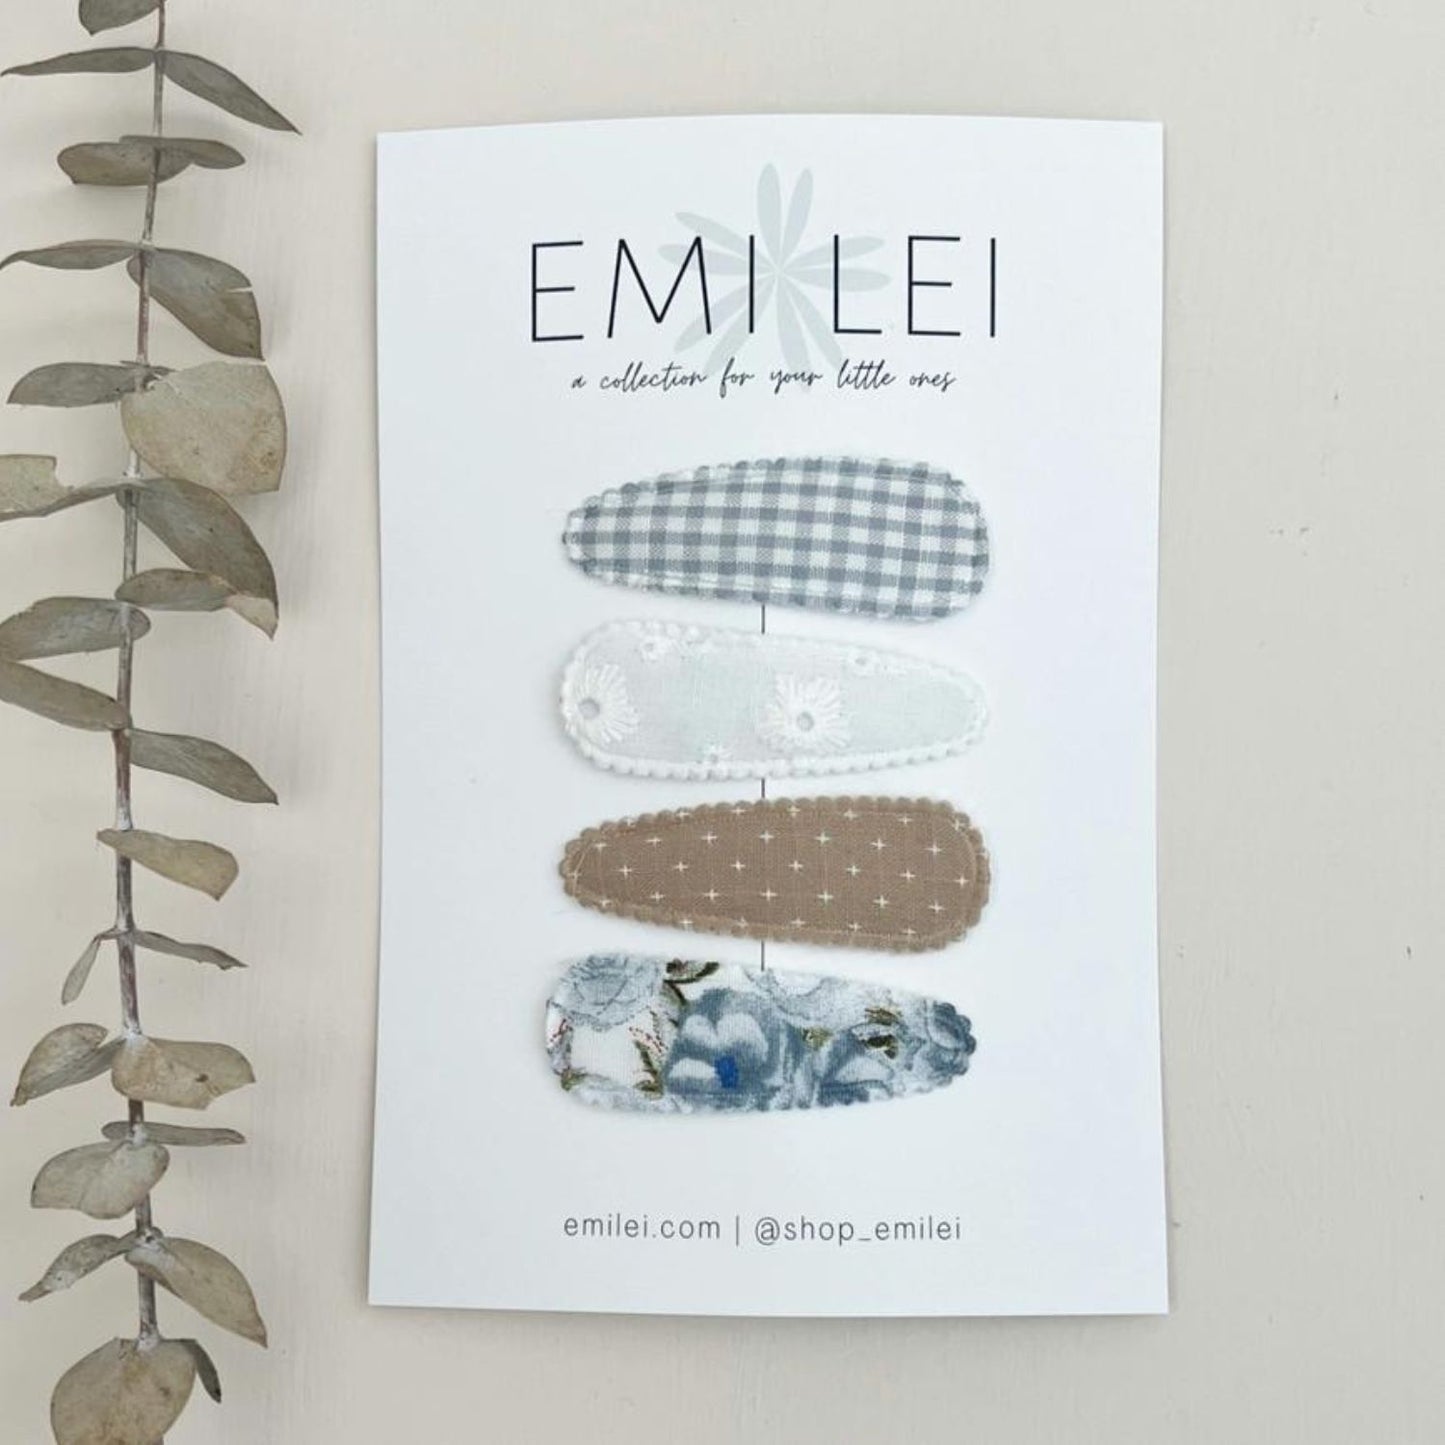 Emi Lei Fabric Barrette Hair Clip - Set of 4 - Dusty Blues Capsules